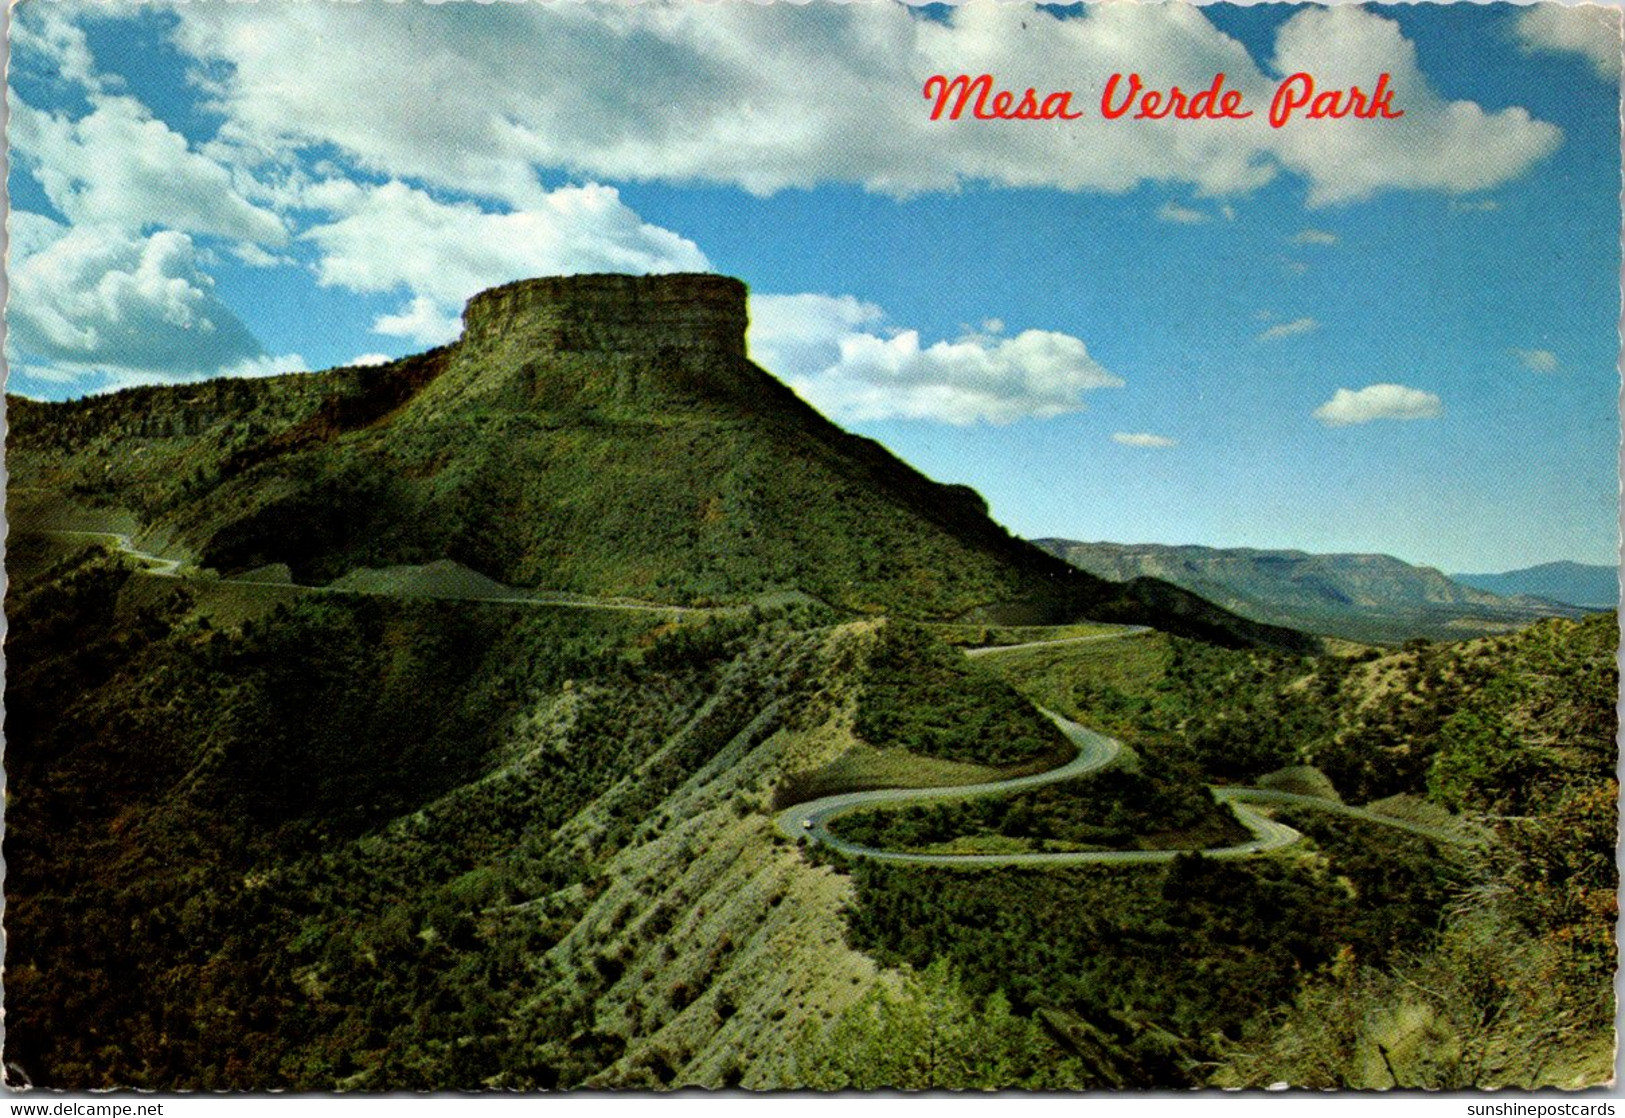 Colorado Mesa Verde National Park Entrance - Mesa Verde